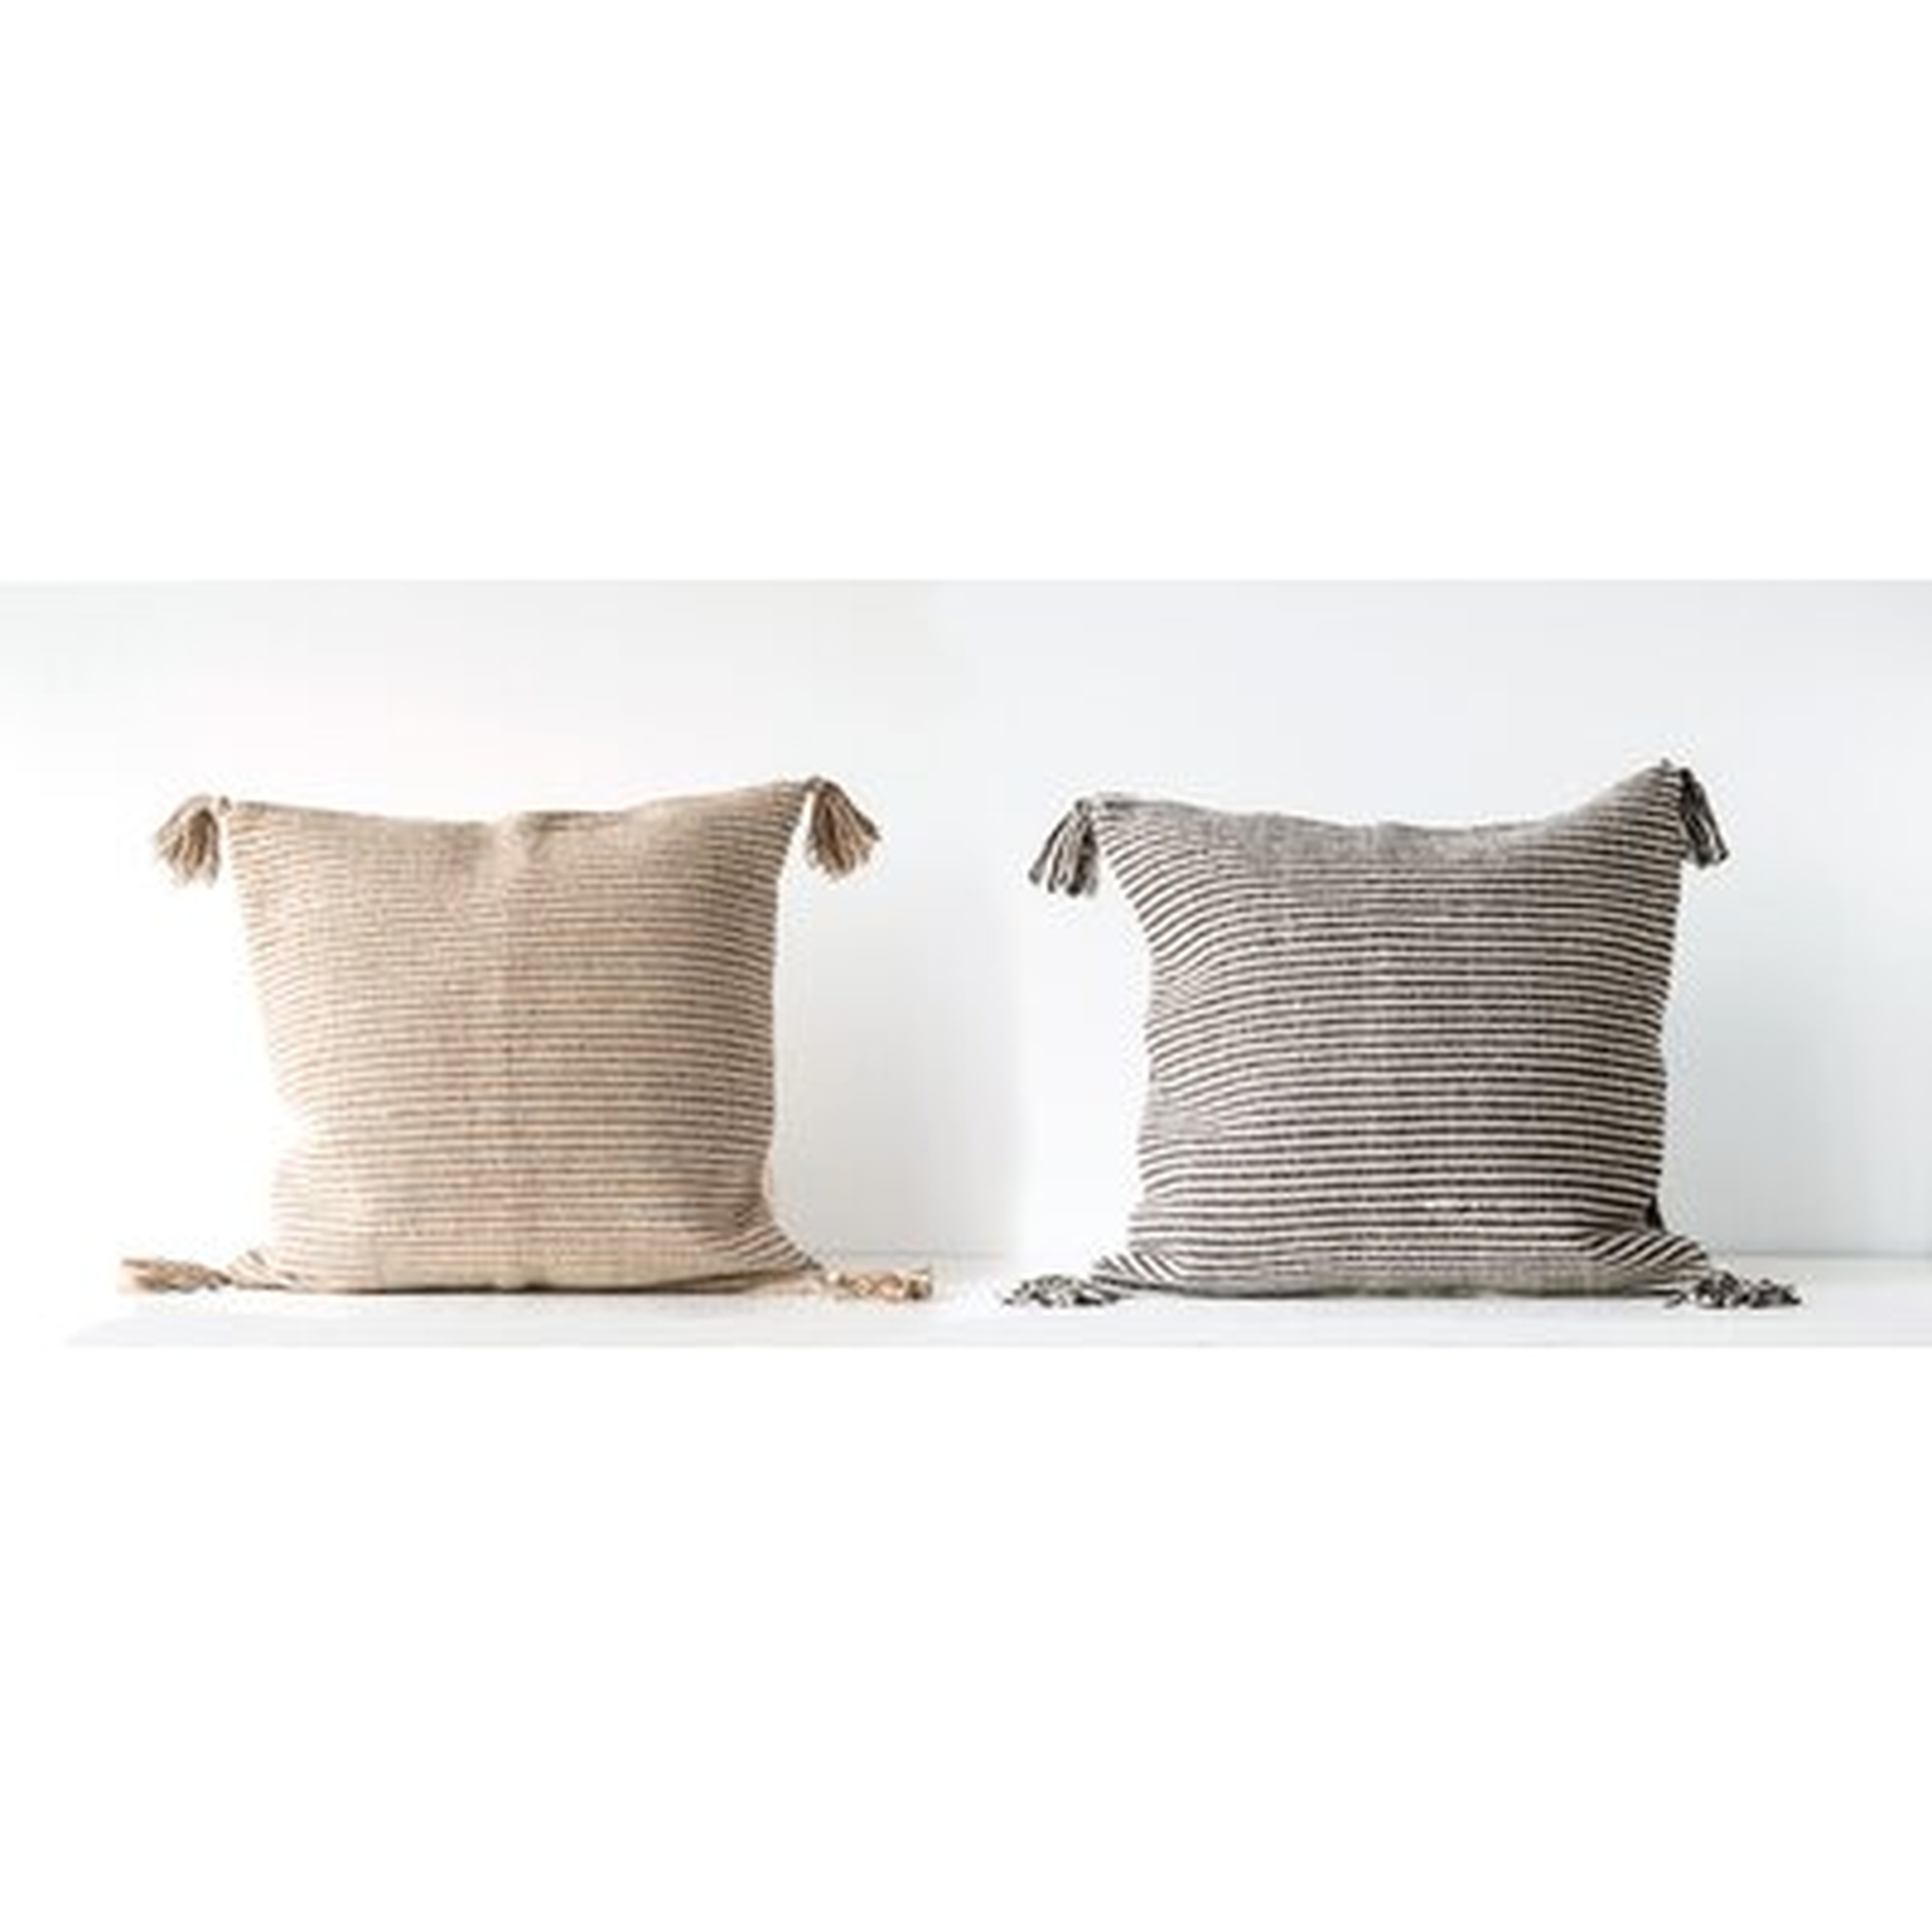 Janousek Striped Woven with Tassels Cotton Throw Pillow (set of 2) - Wayfair